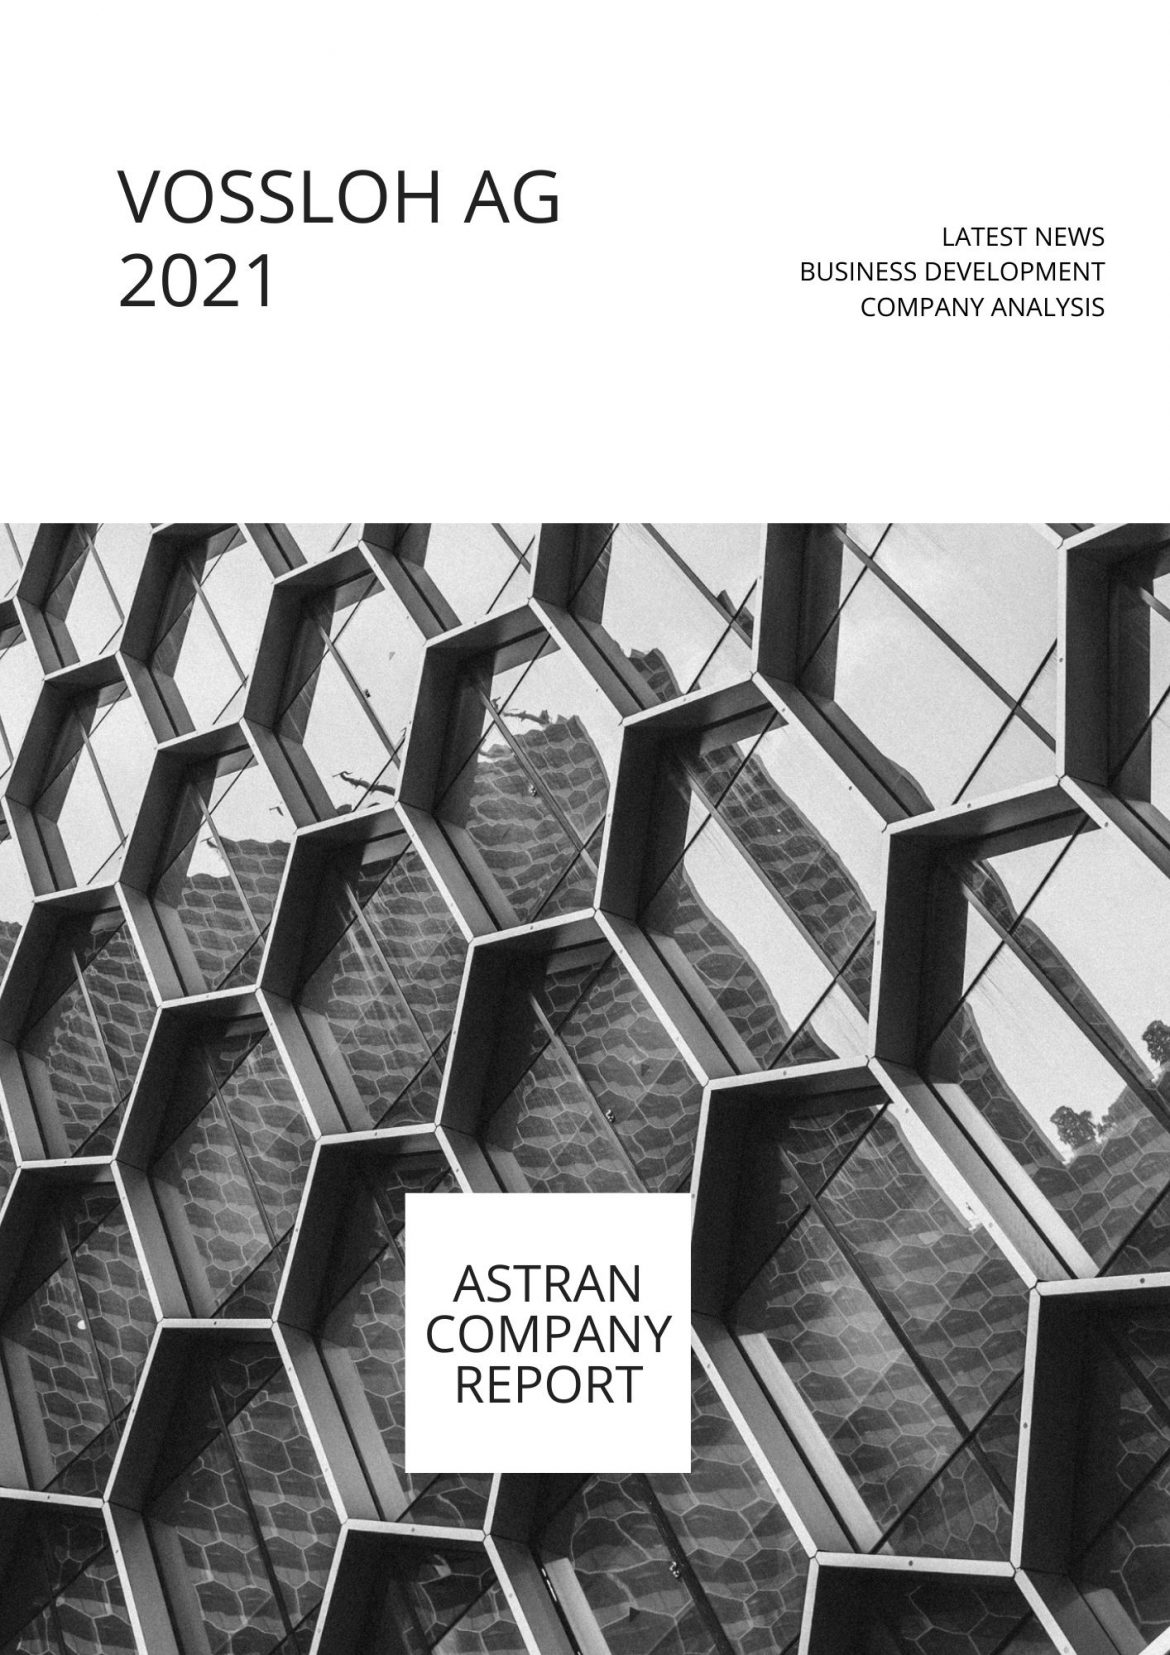 Company Report & Profile Vossloh AG 2021